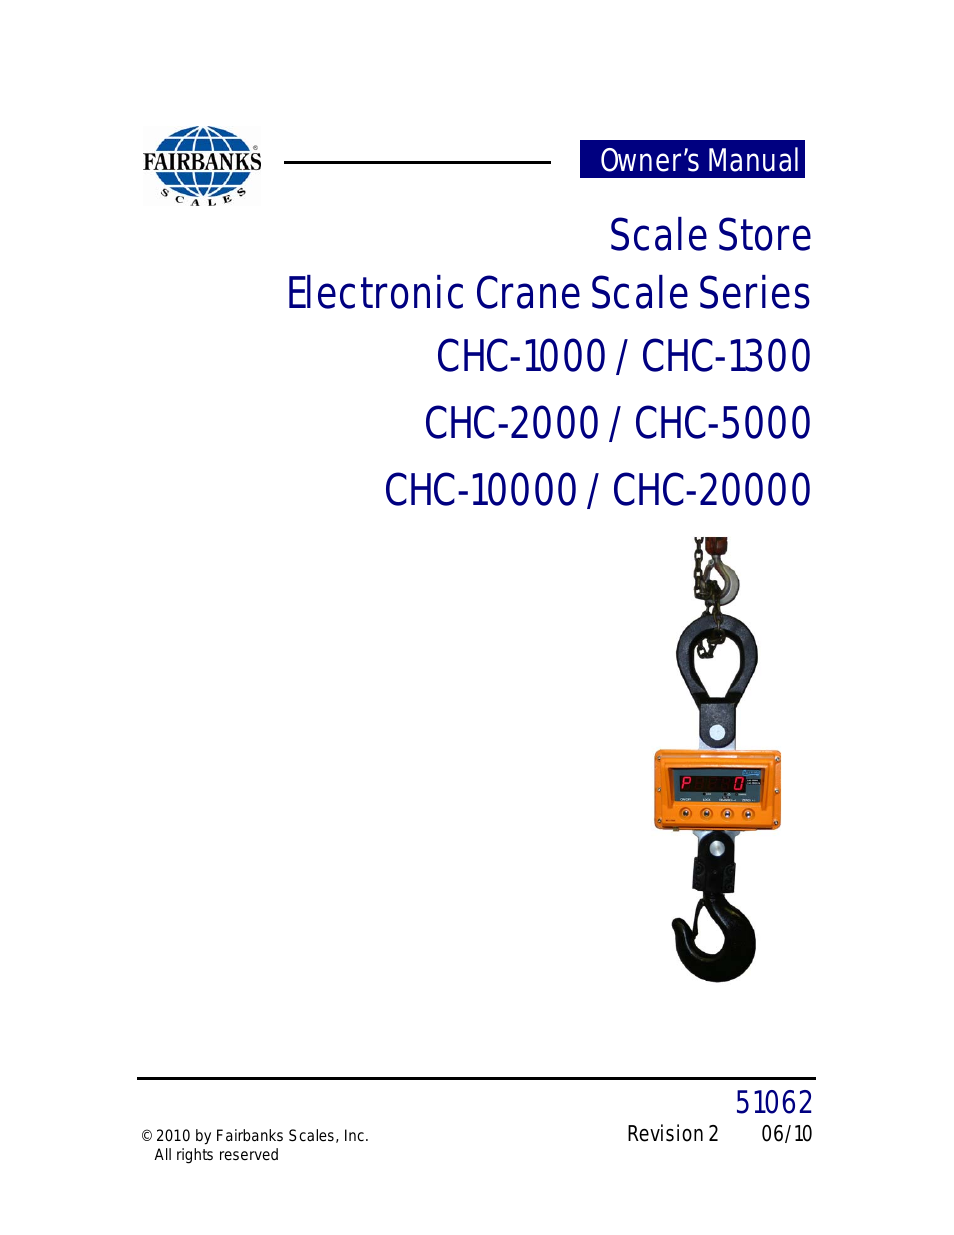 CHC-2000 / CHC-5000 Scale Store